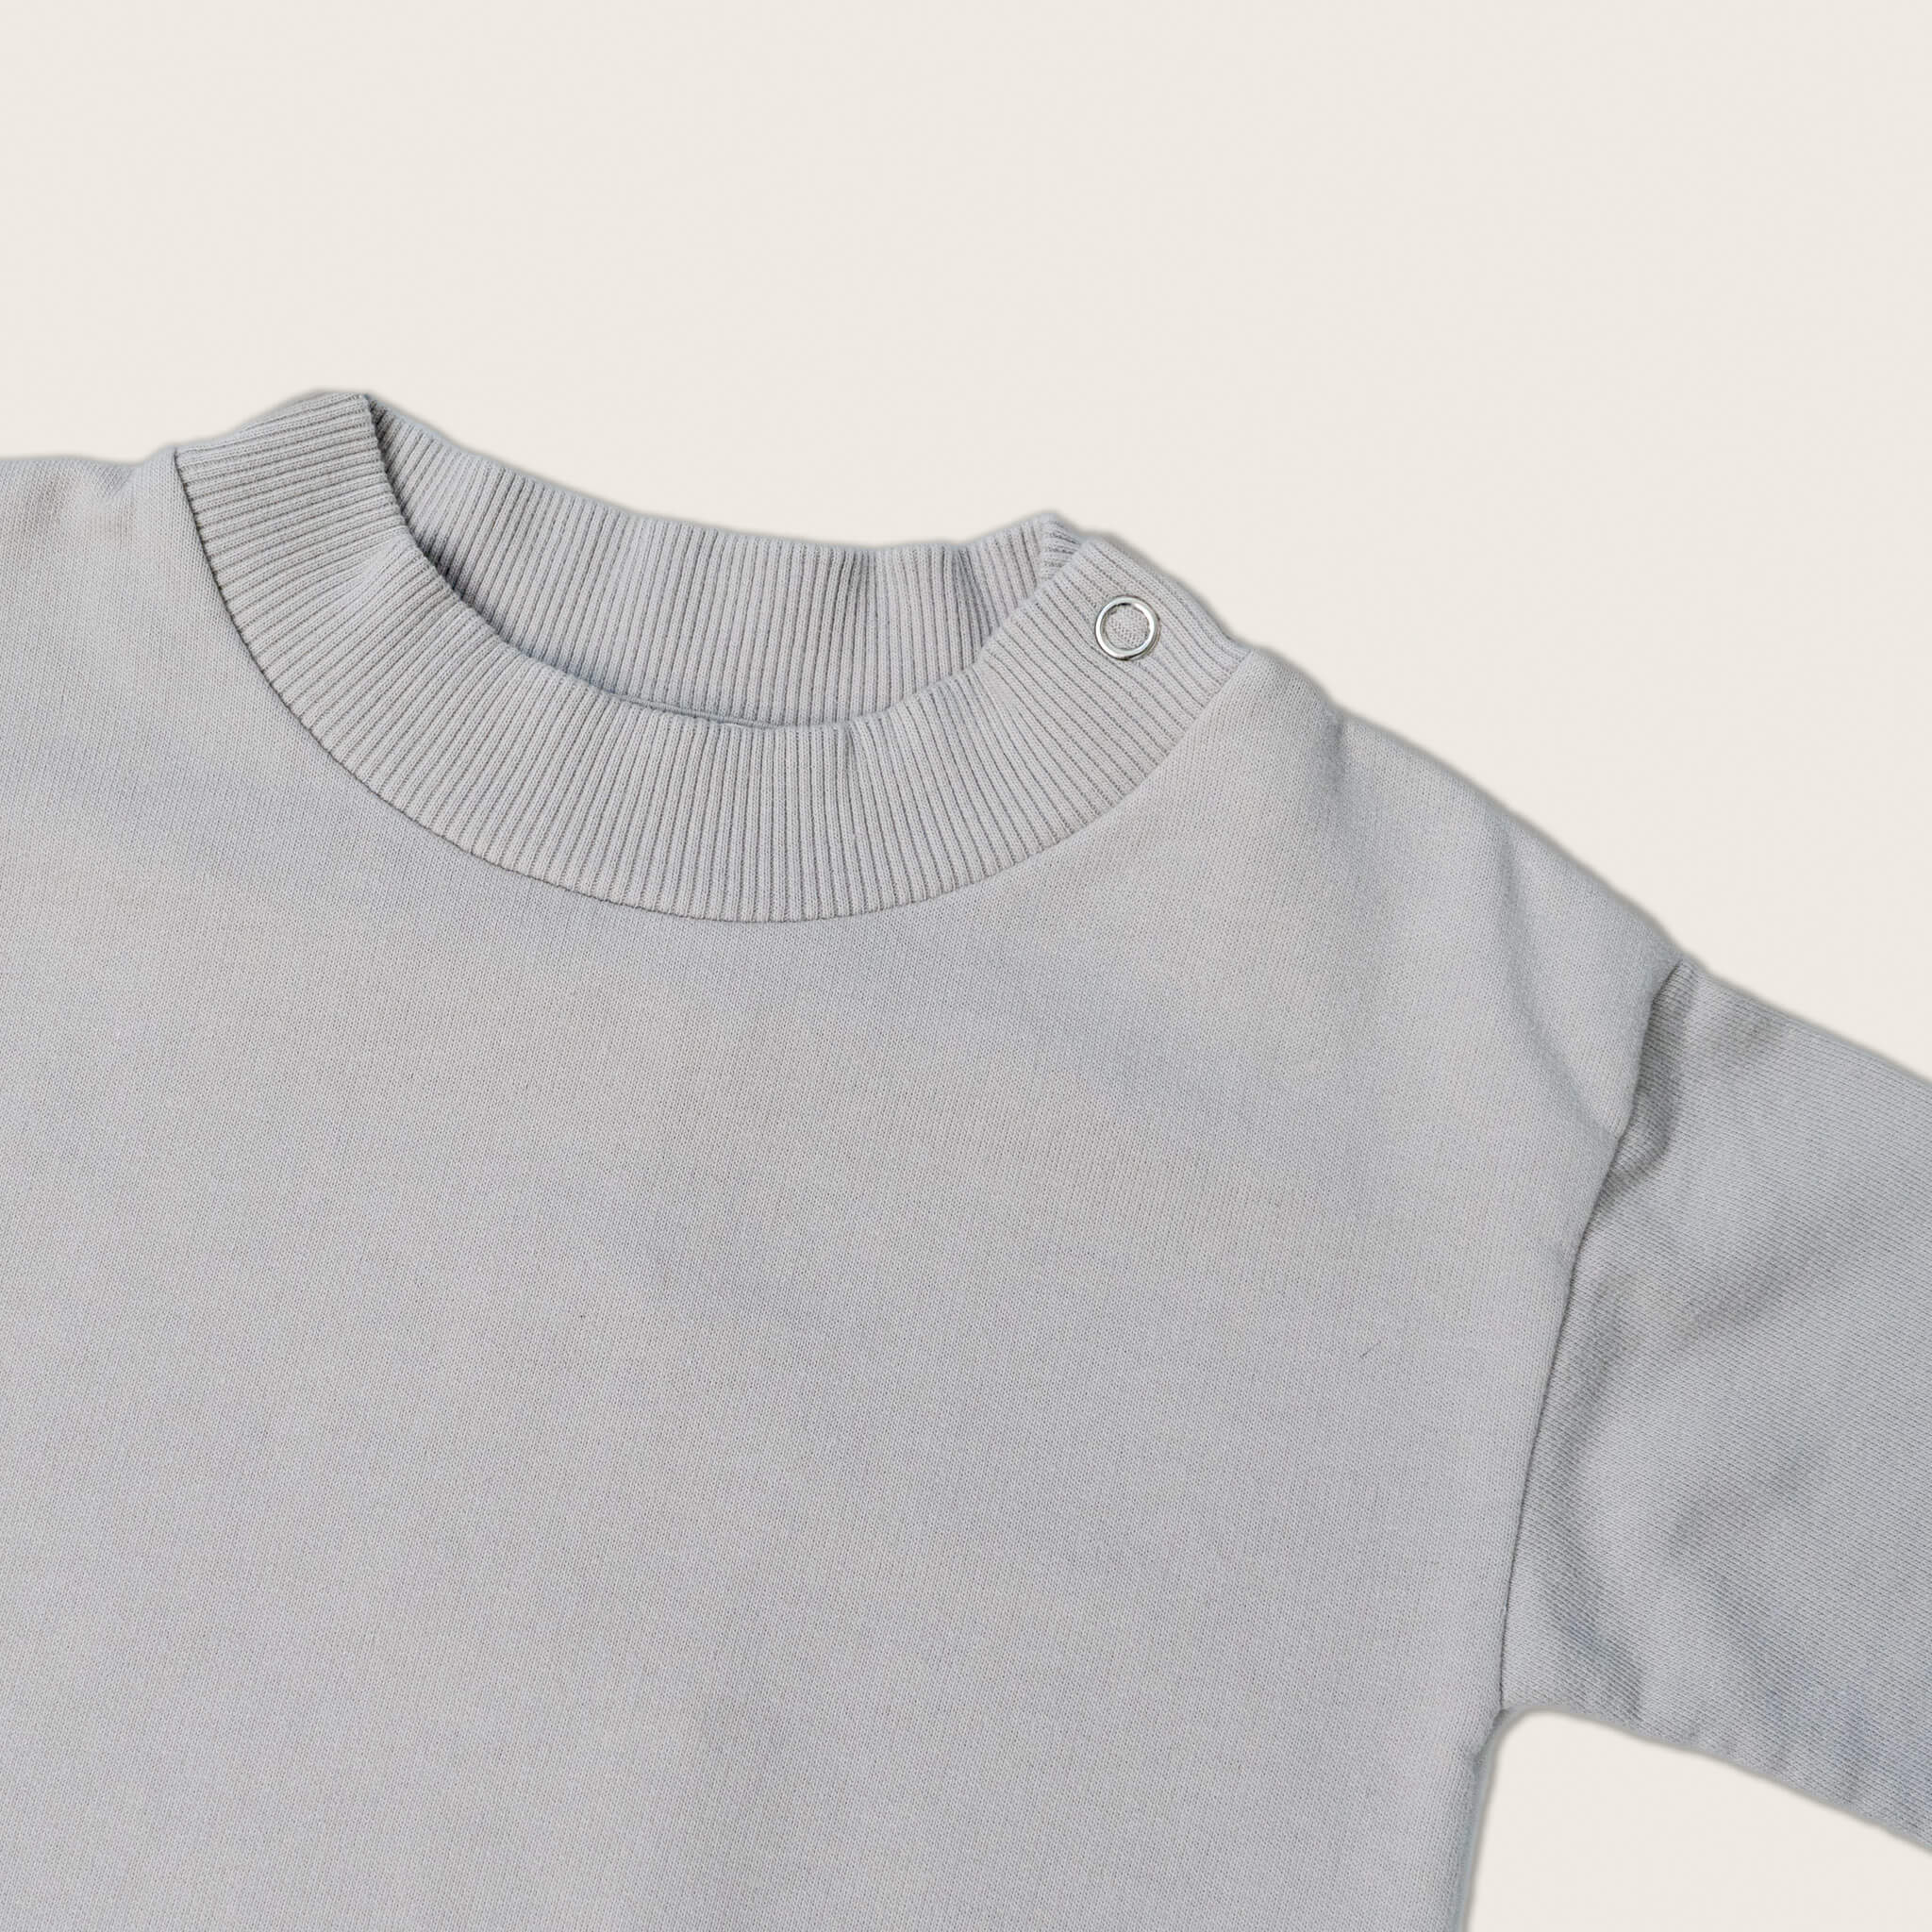 Grey Oversized Sweater - Studio Clay kids